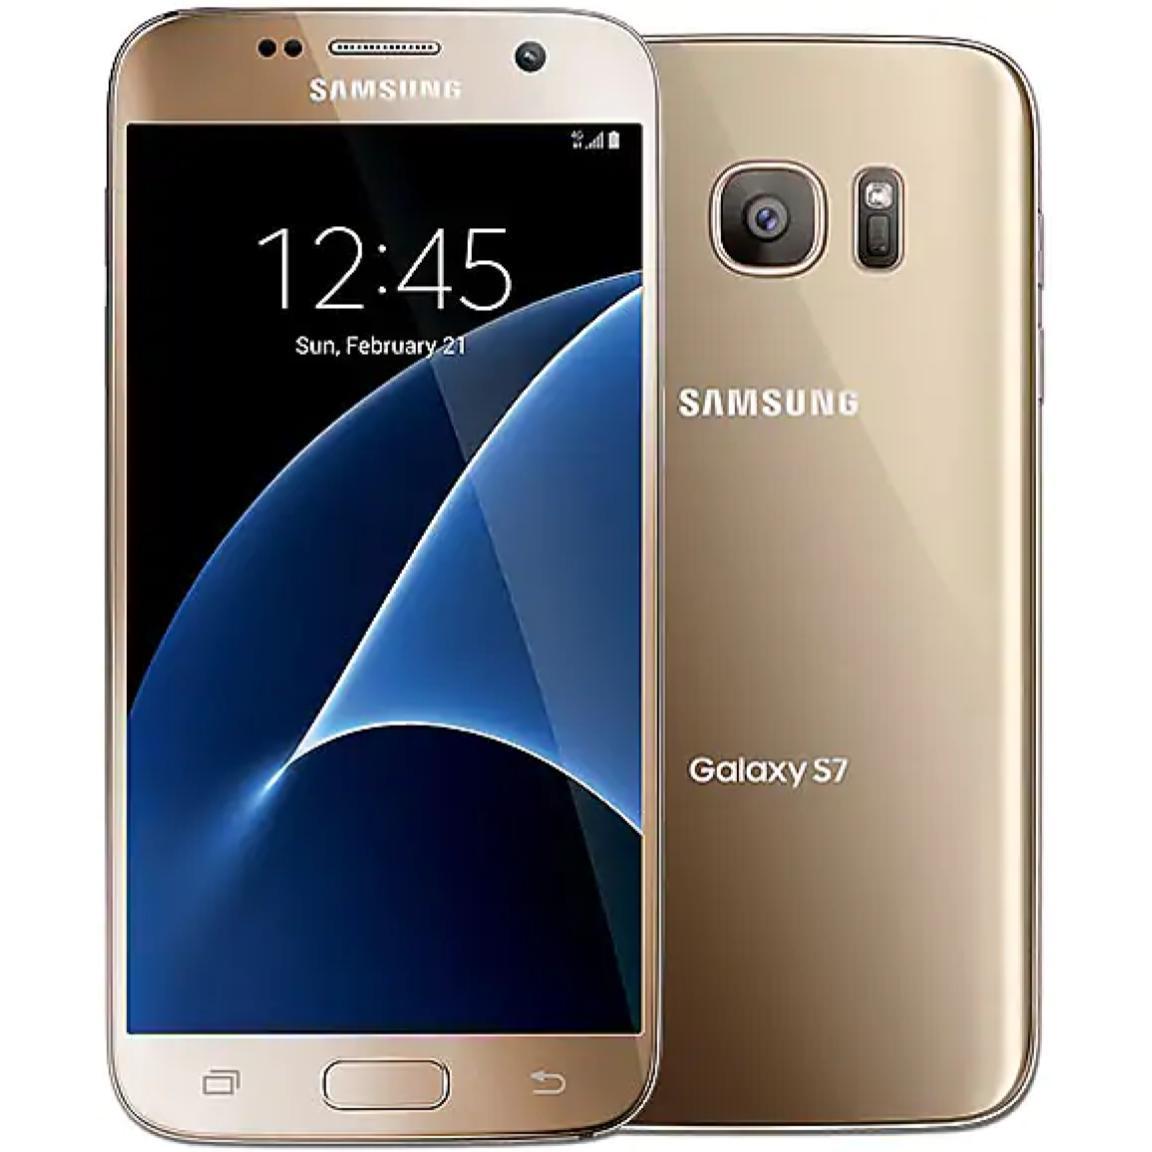 Samsung Galaxy S7 - Unlocked GSM - 32GB - Android Smartphone